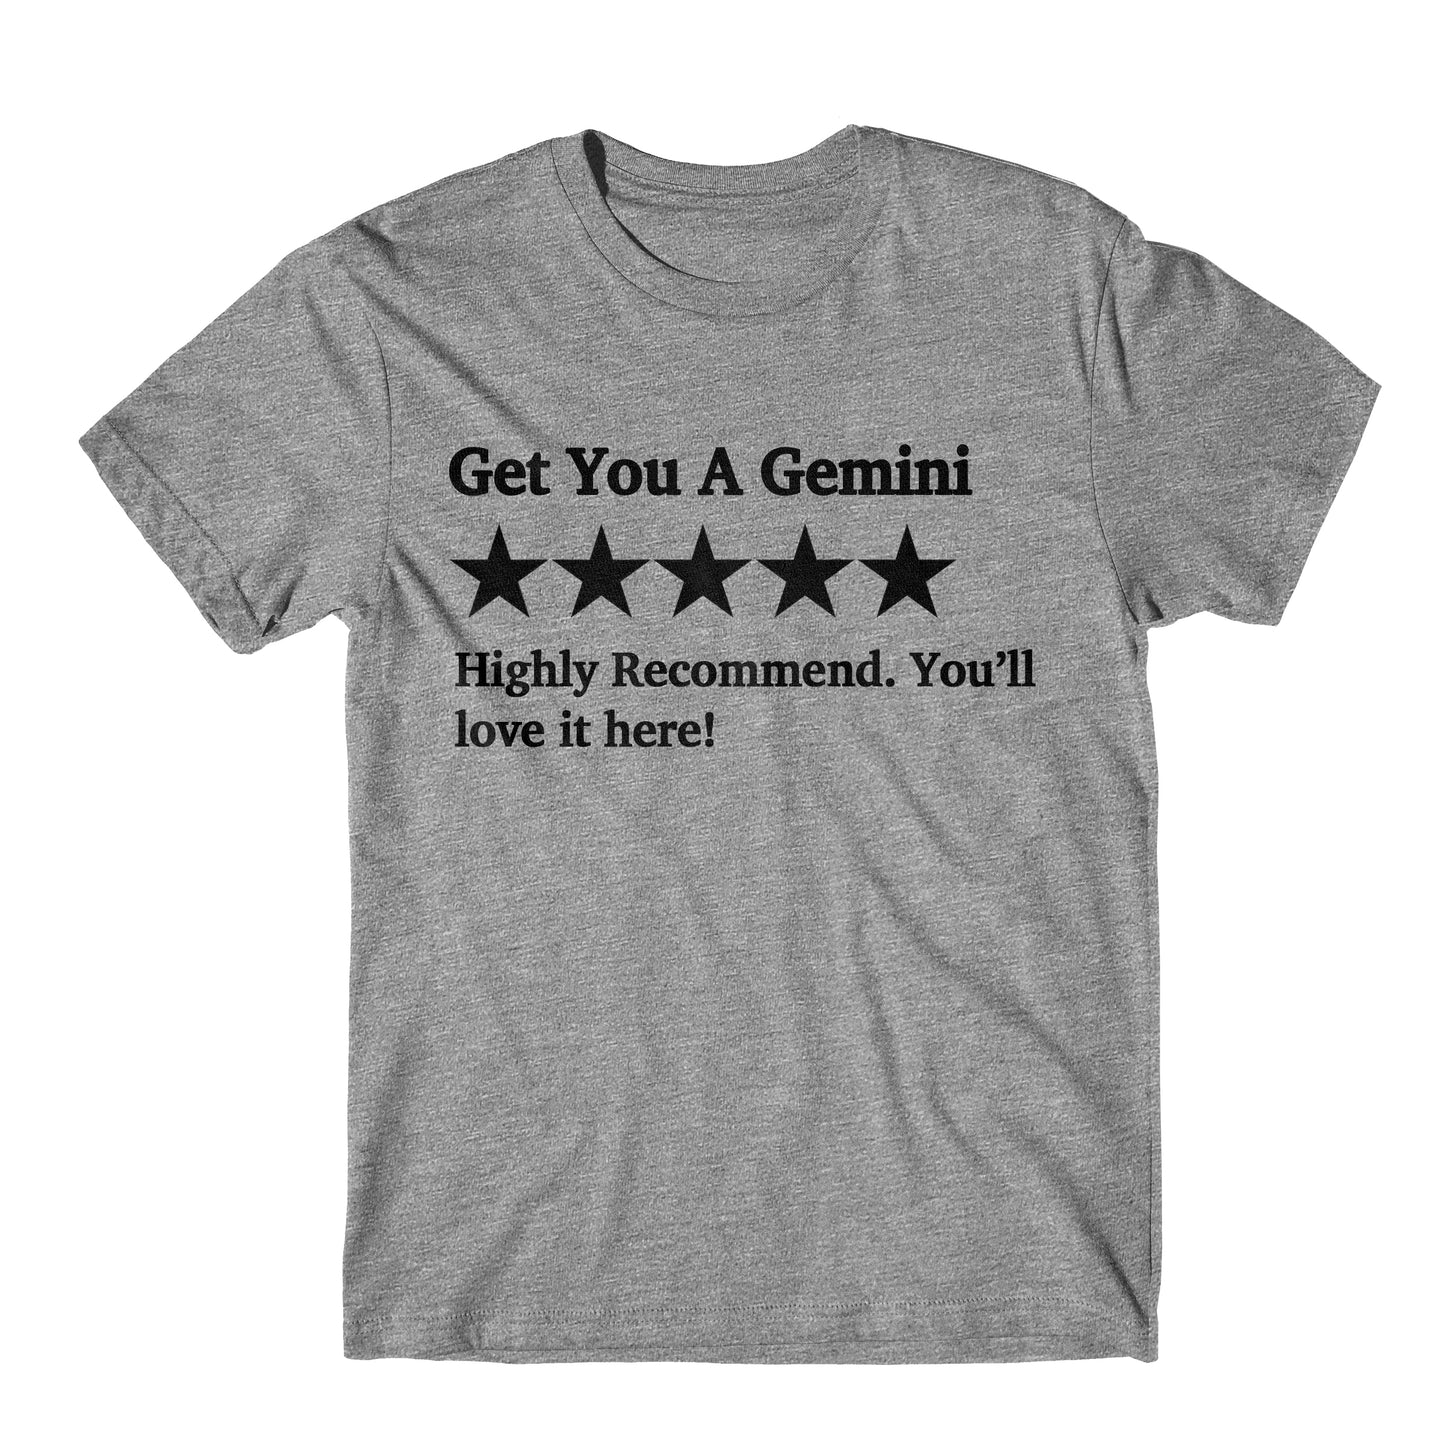 "Get You A Gemini Five Star Rating" Tee